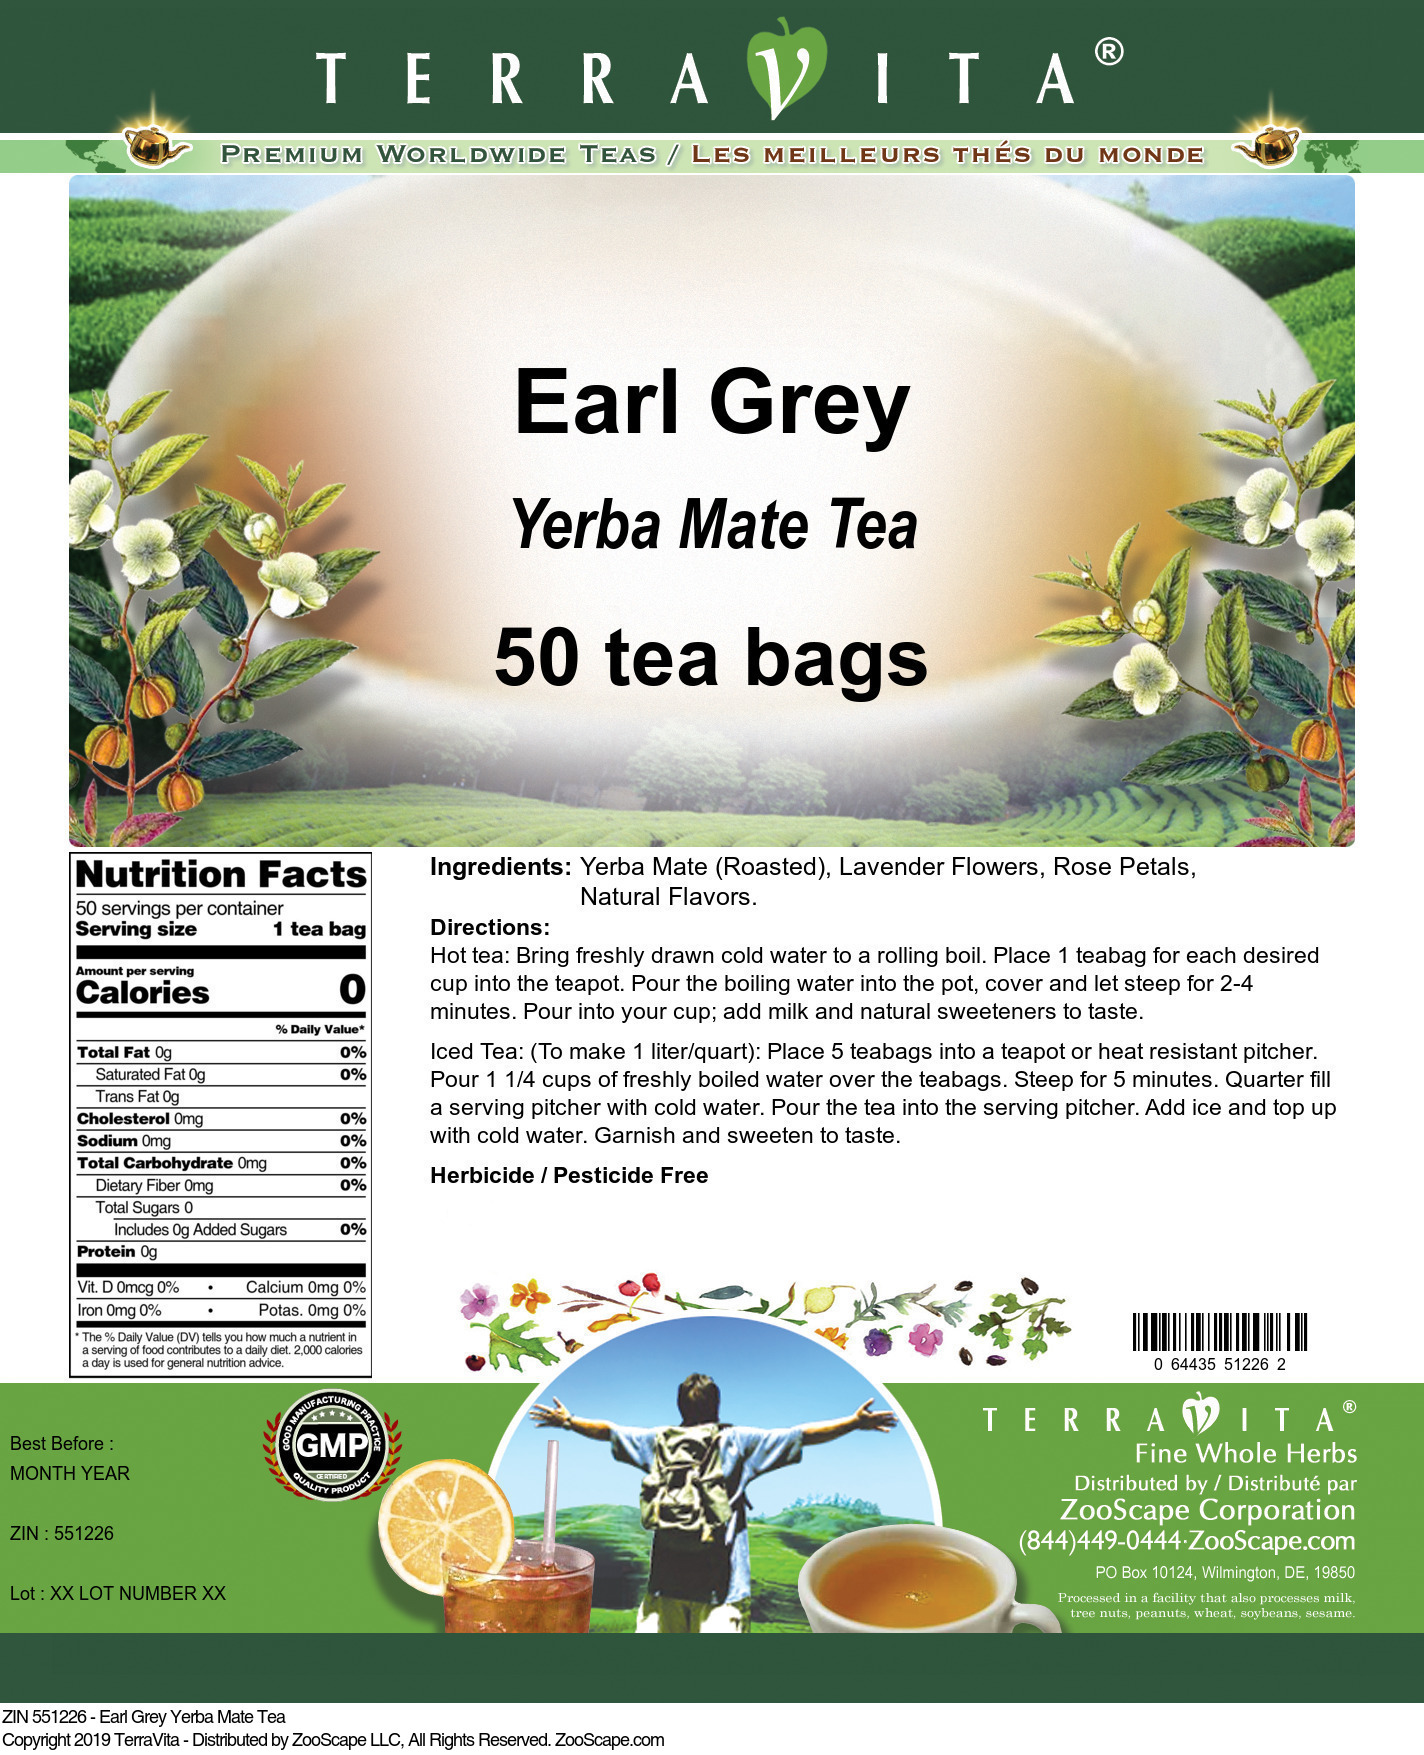 Earl Grey Yerba Mate Tea - Label